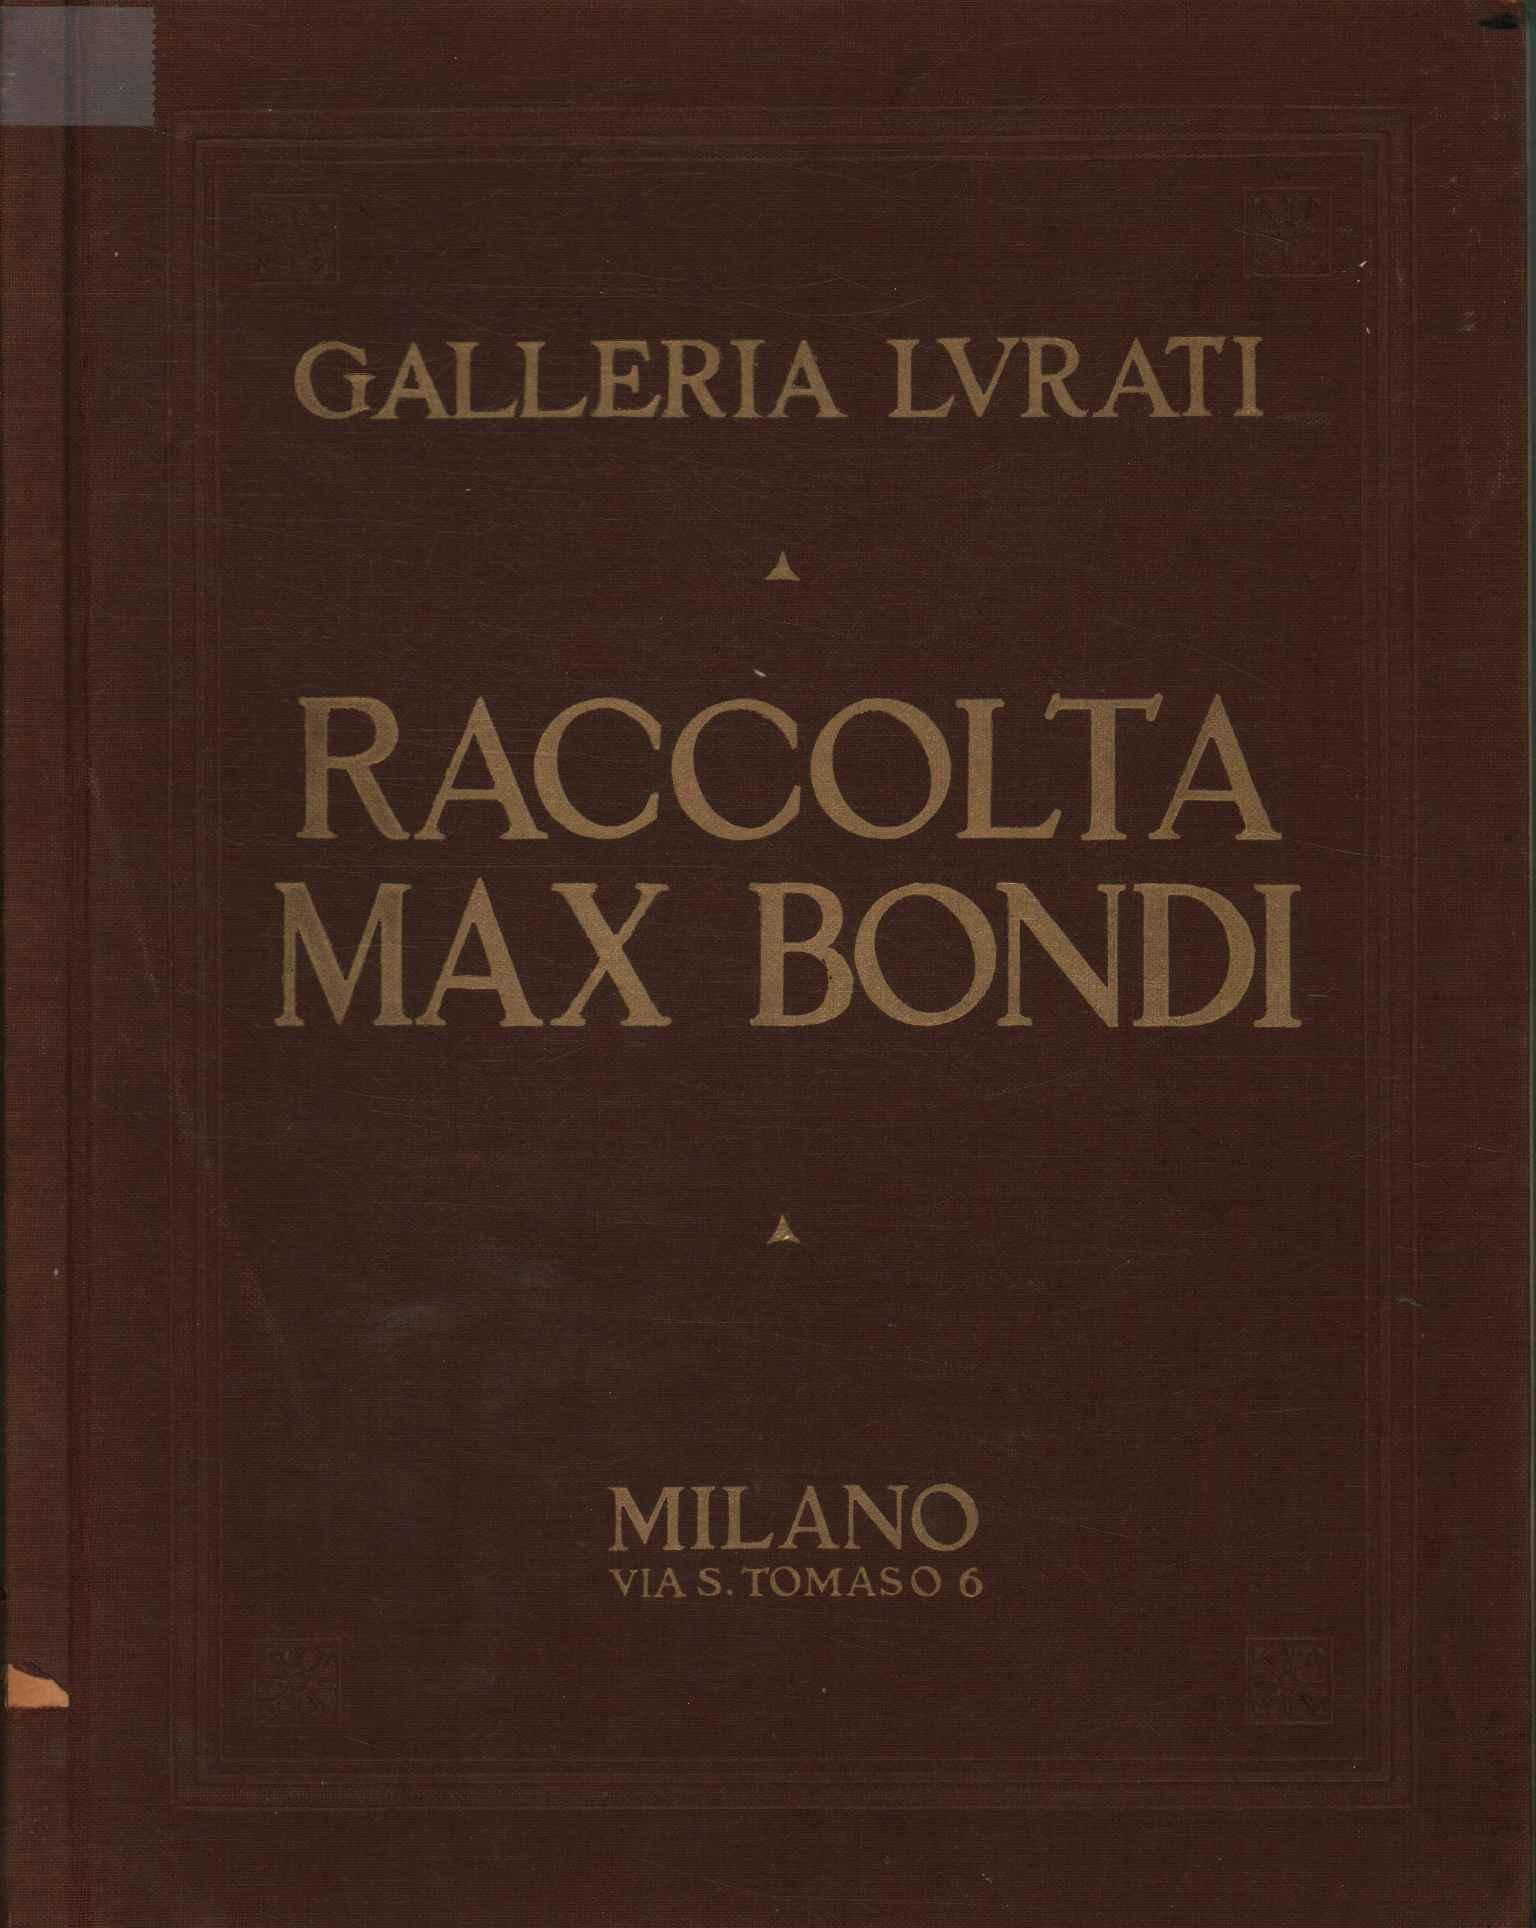 Max Bondi collection